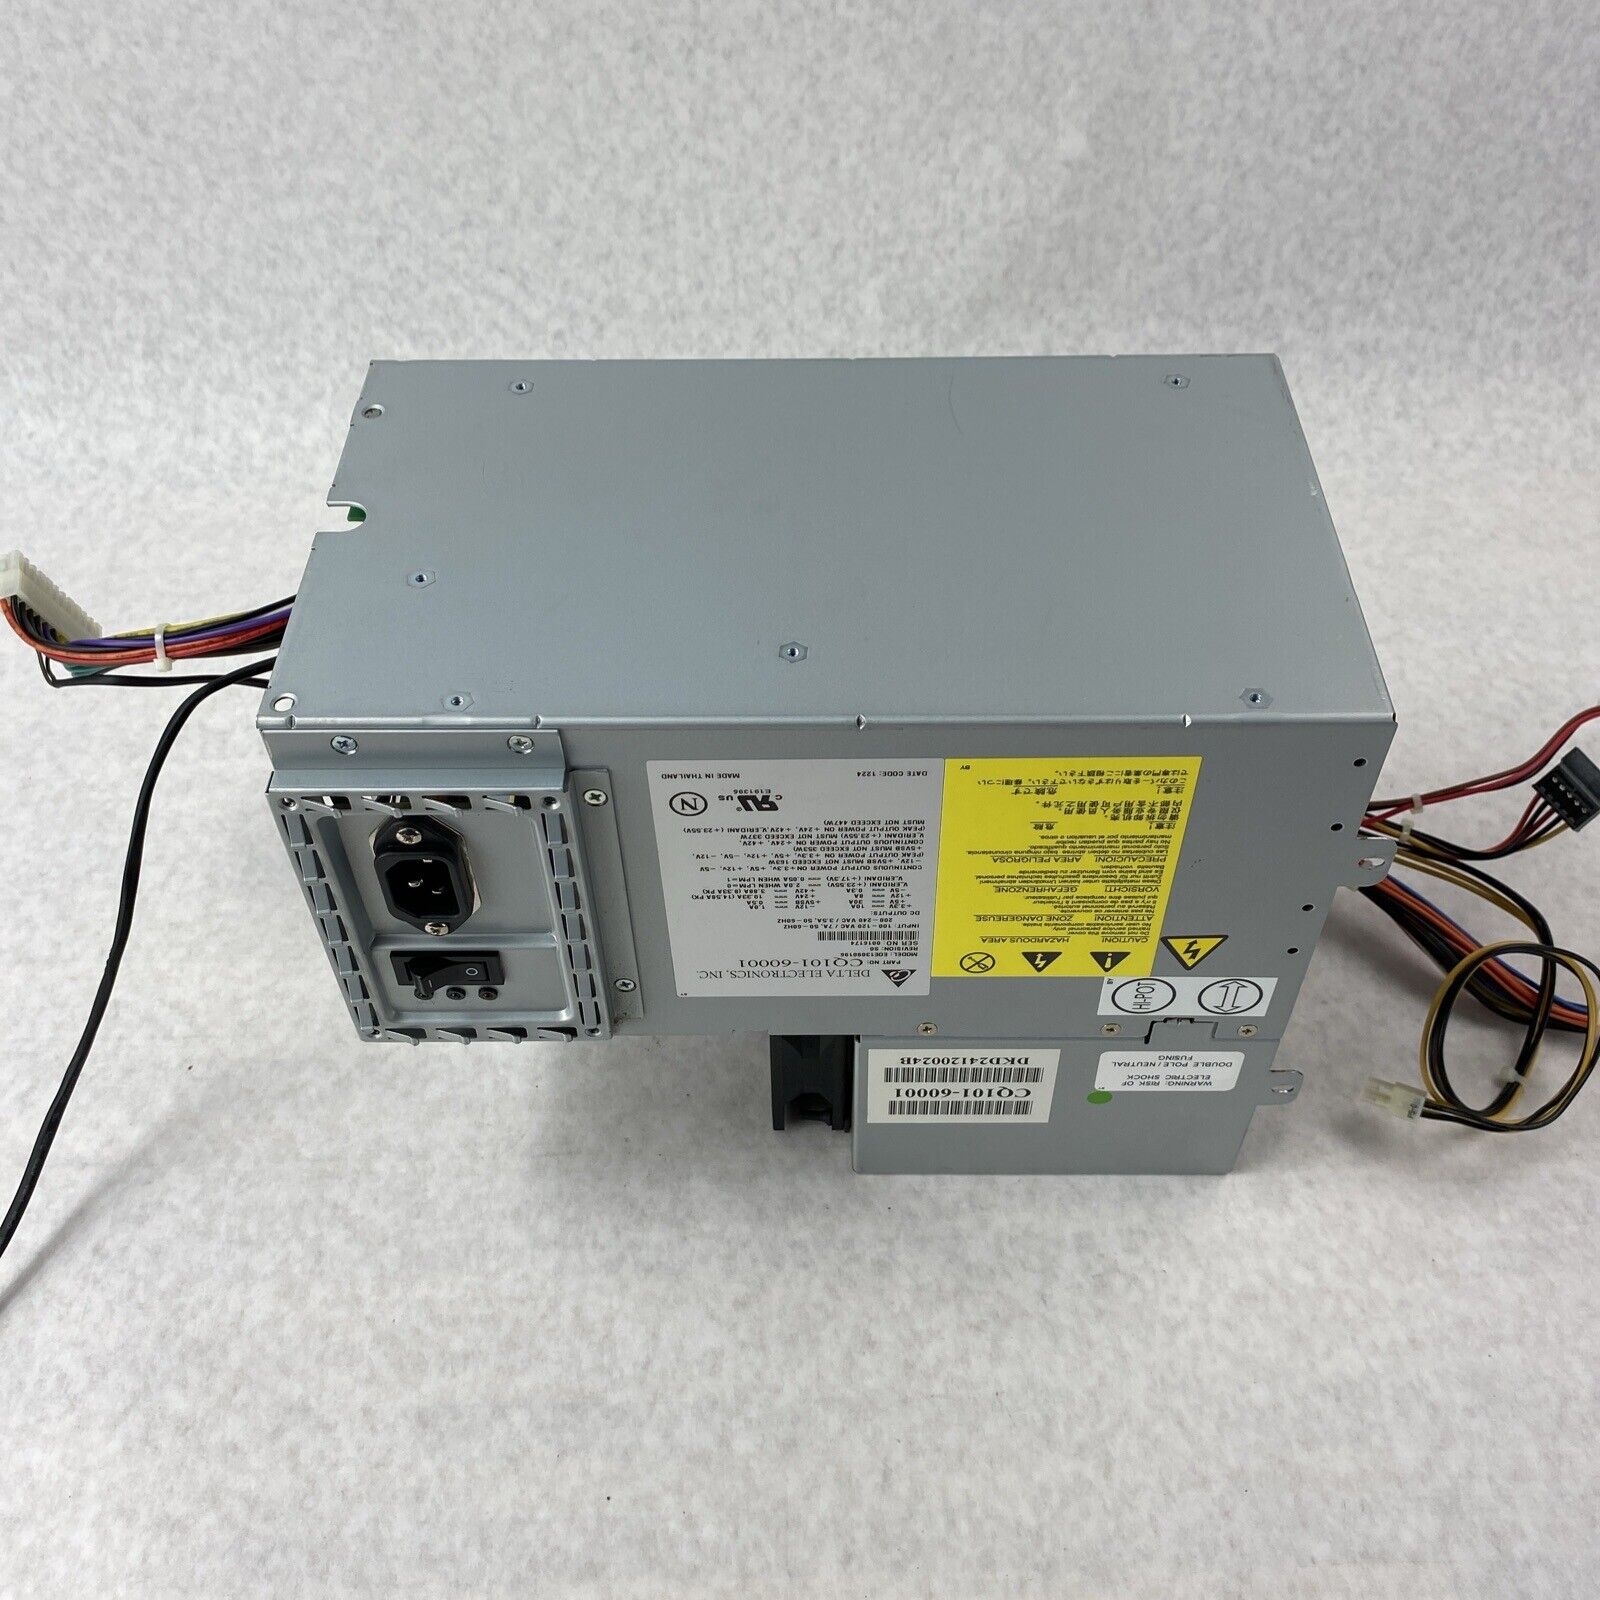 Delta Electronics CQ101-60001 Power Supply EOE13090196 For HP Designjet T7100